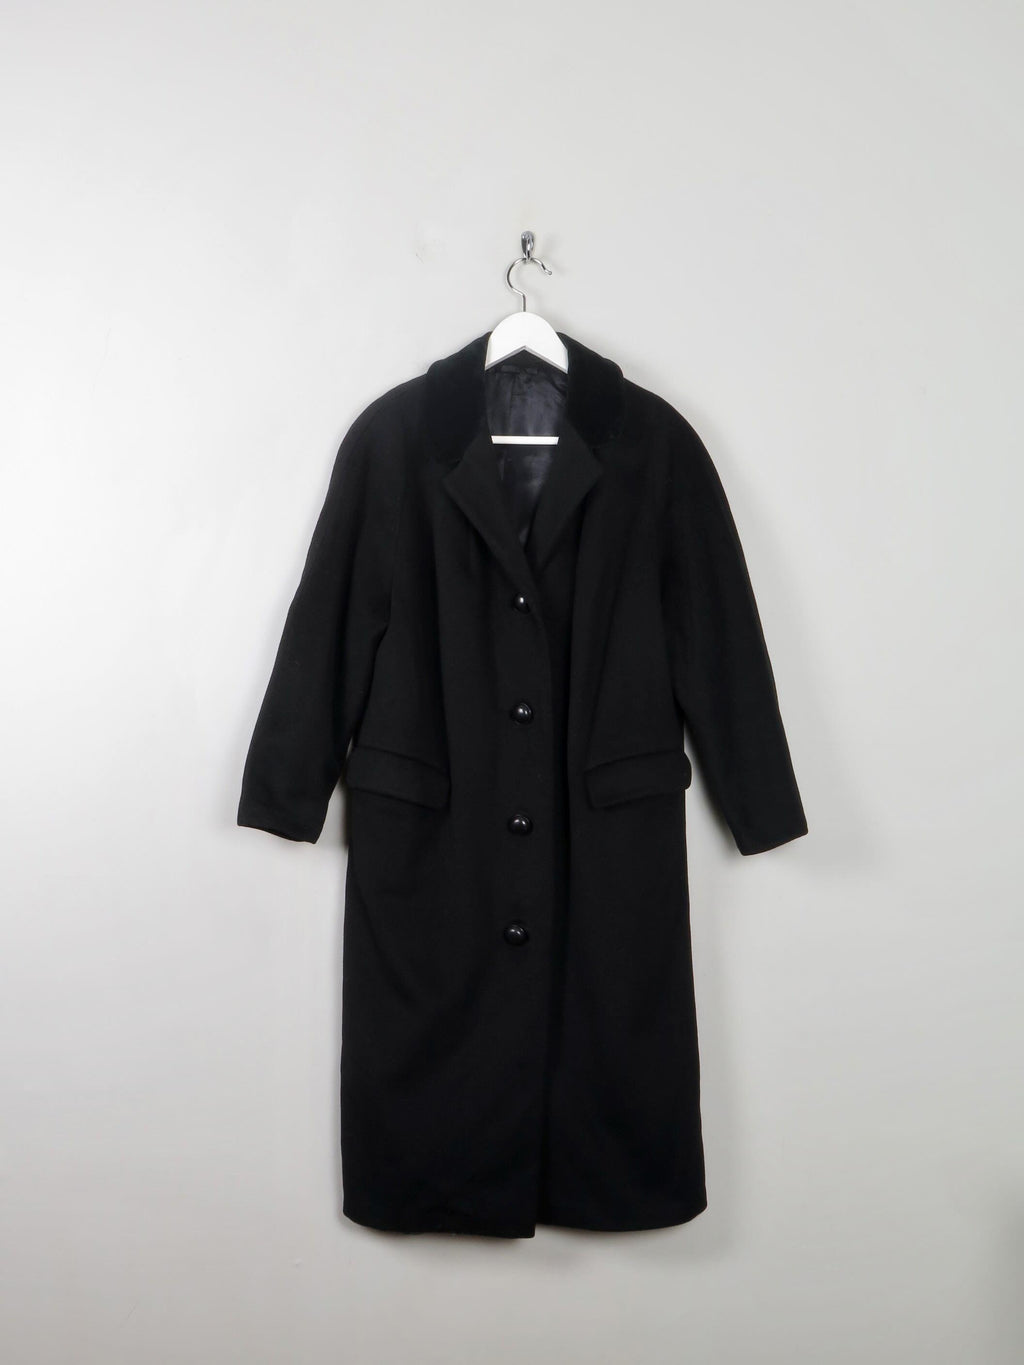 Women's Black Wool 1950s Cashmere/Wool Vintage Coat S/M - The Harlequin